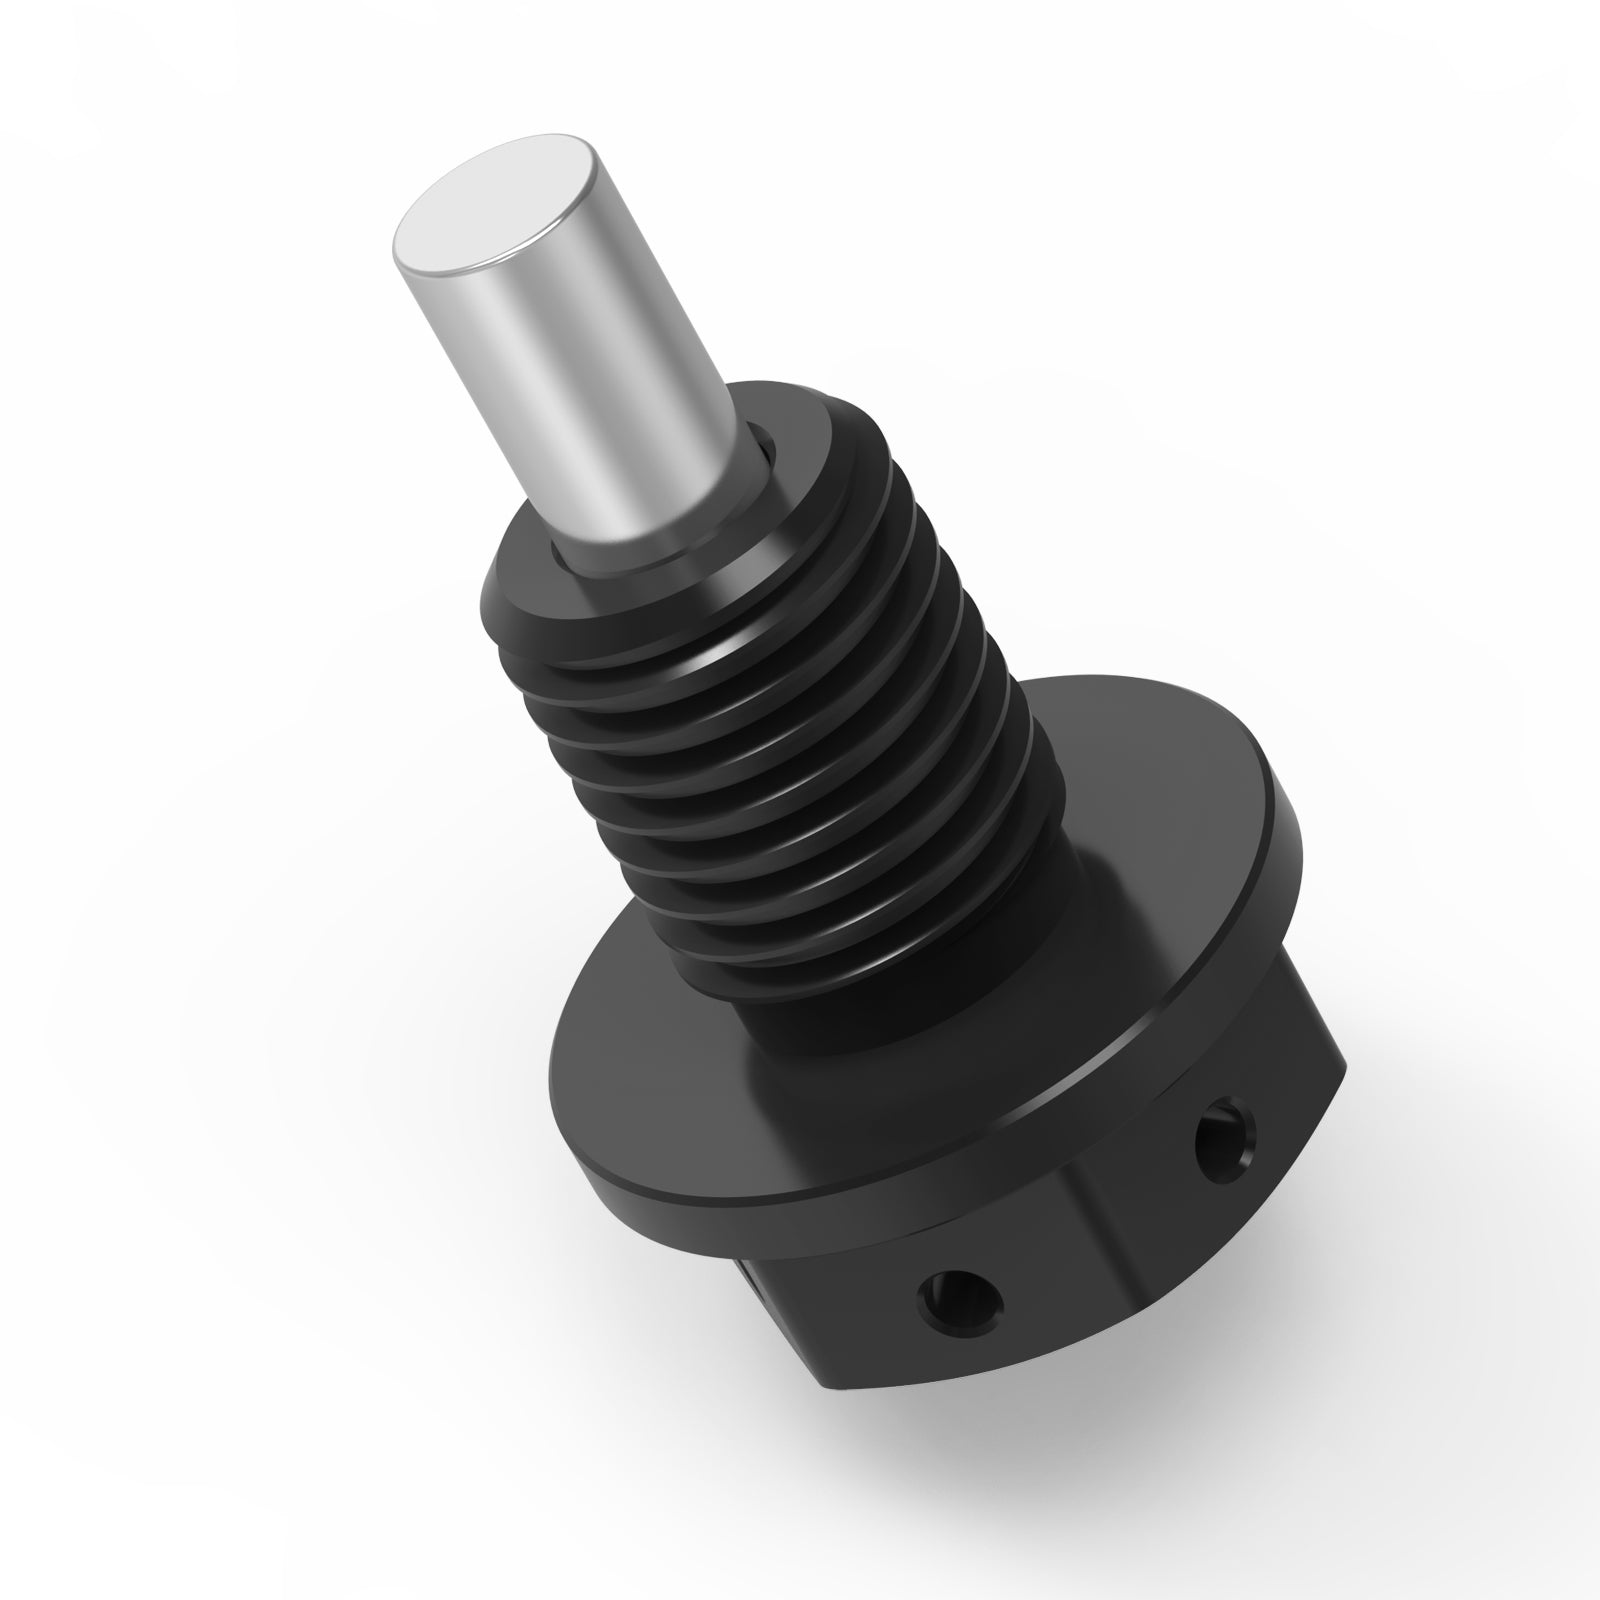 MMR Performance Magnetic Oil Sump Drain Plug - M12x1.5